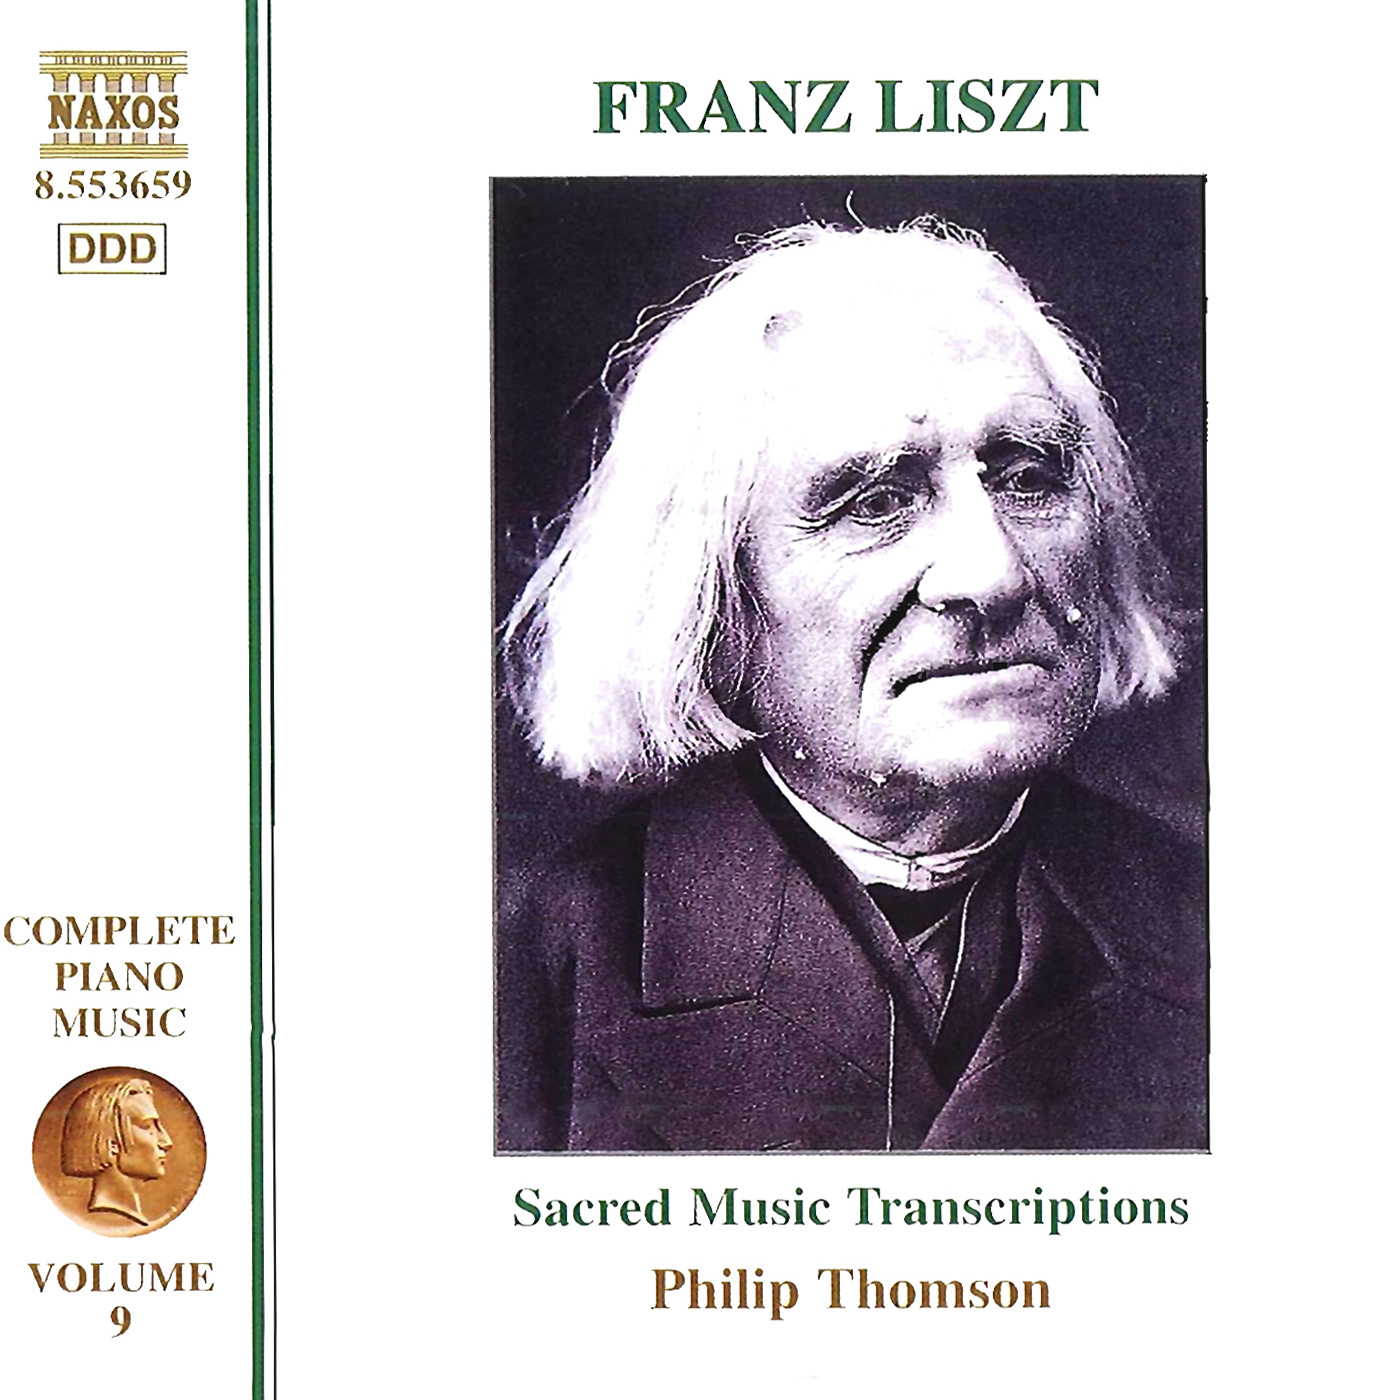 Franz Liszt 'Sacred Music Transcription' Philip Thomson' CD/1997/Classic/Europe